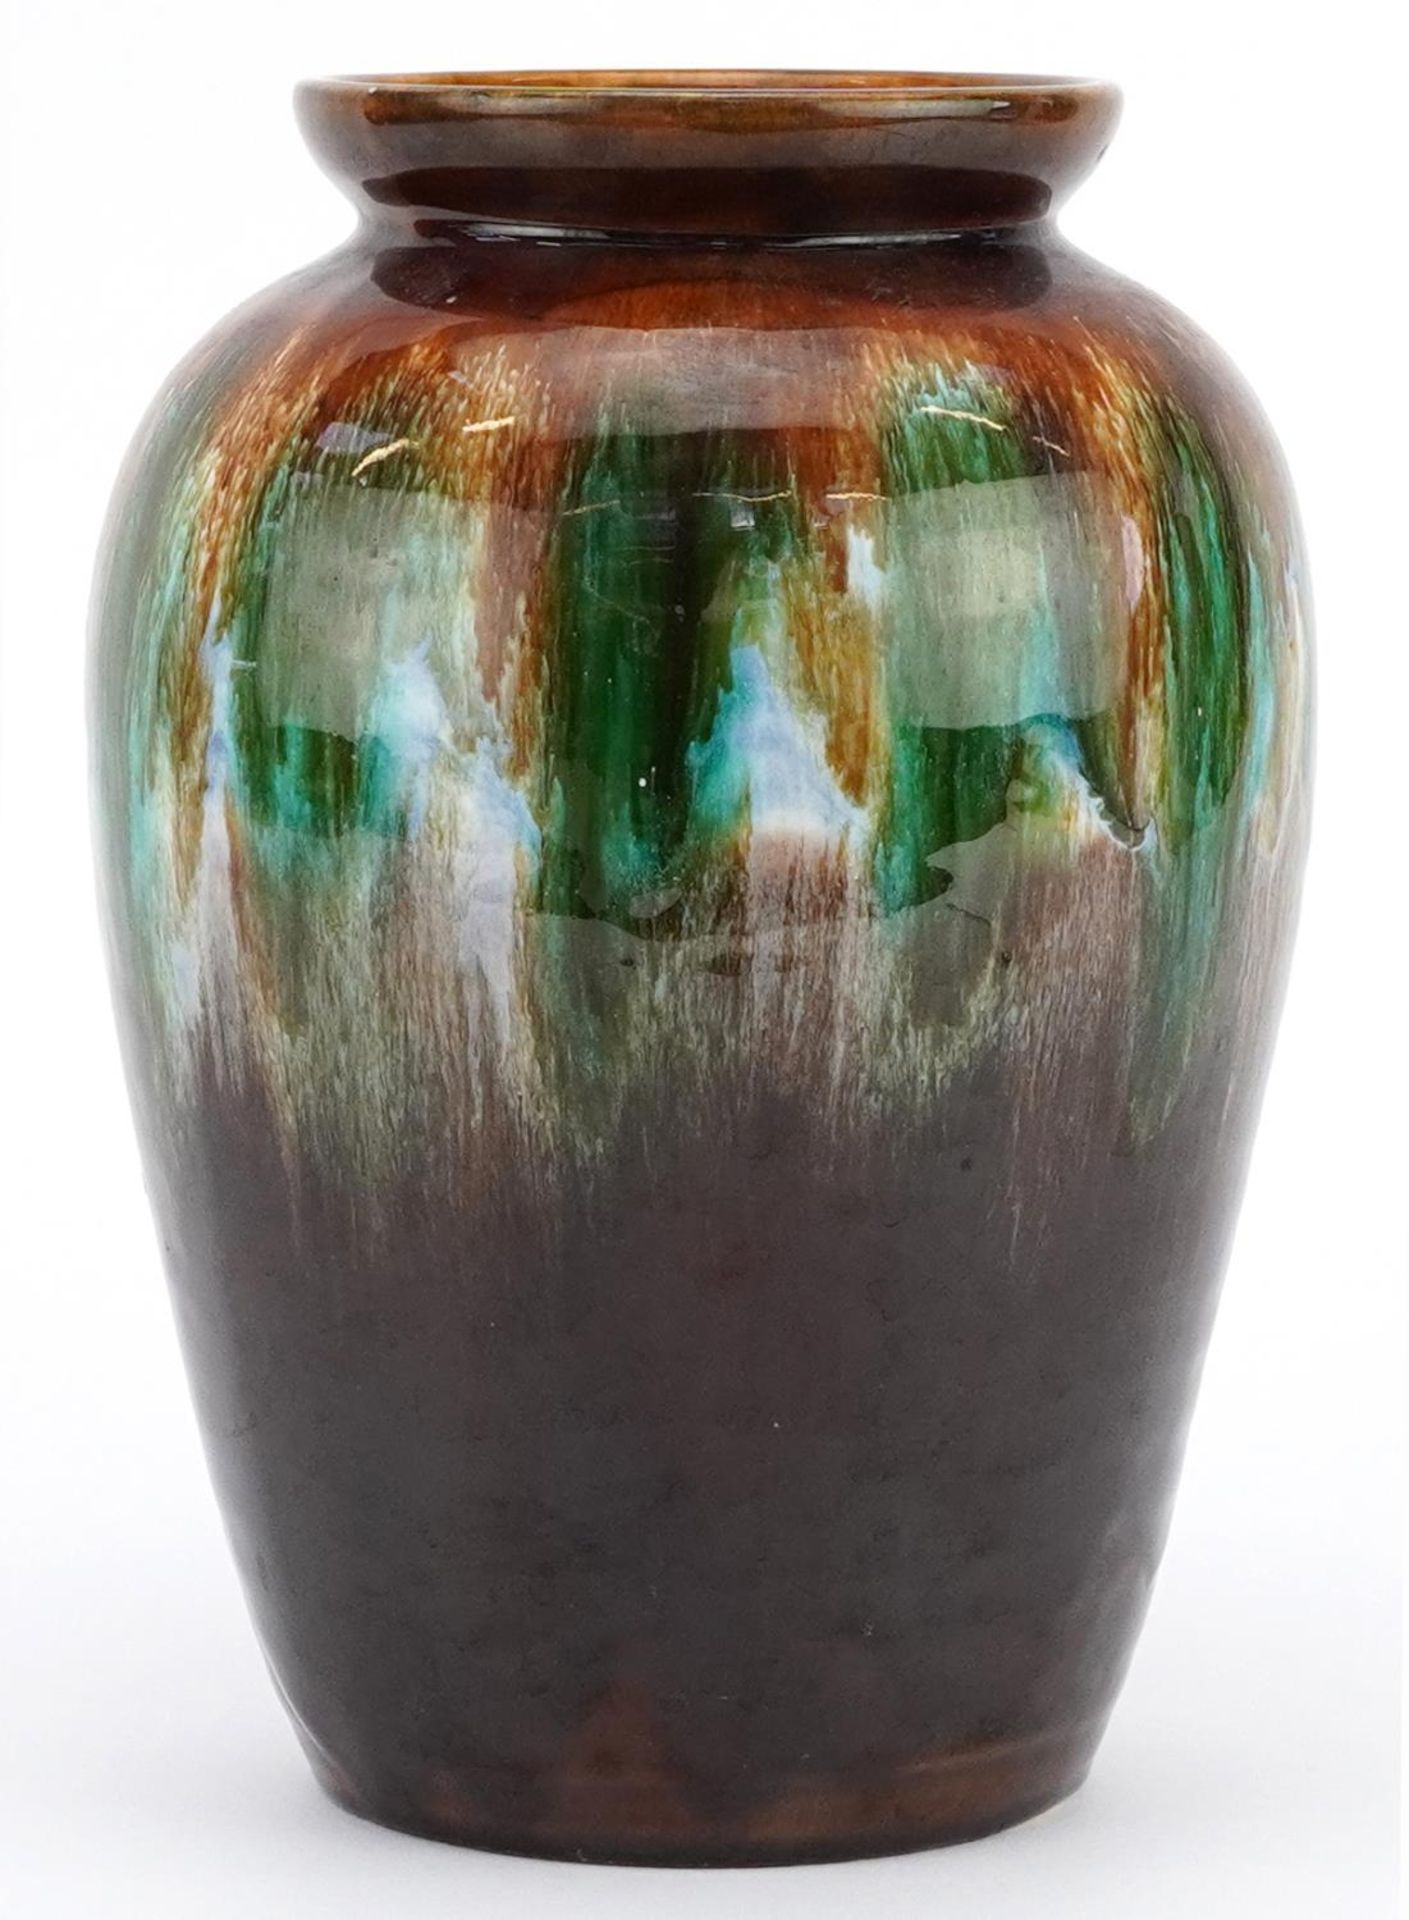 Austrian Arts & Crafts vase having a mottled brown and green glaze with Steatit Osterr Edelkeramik